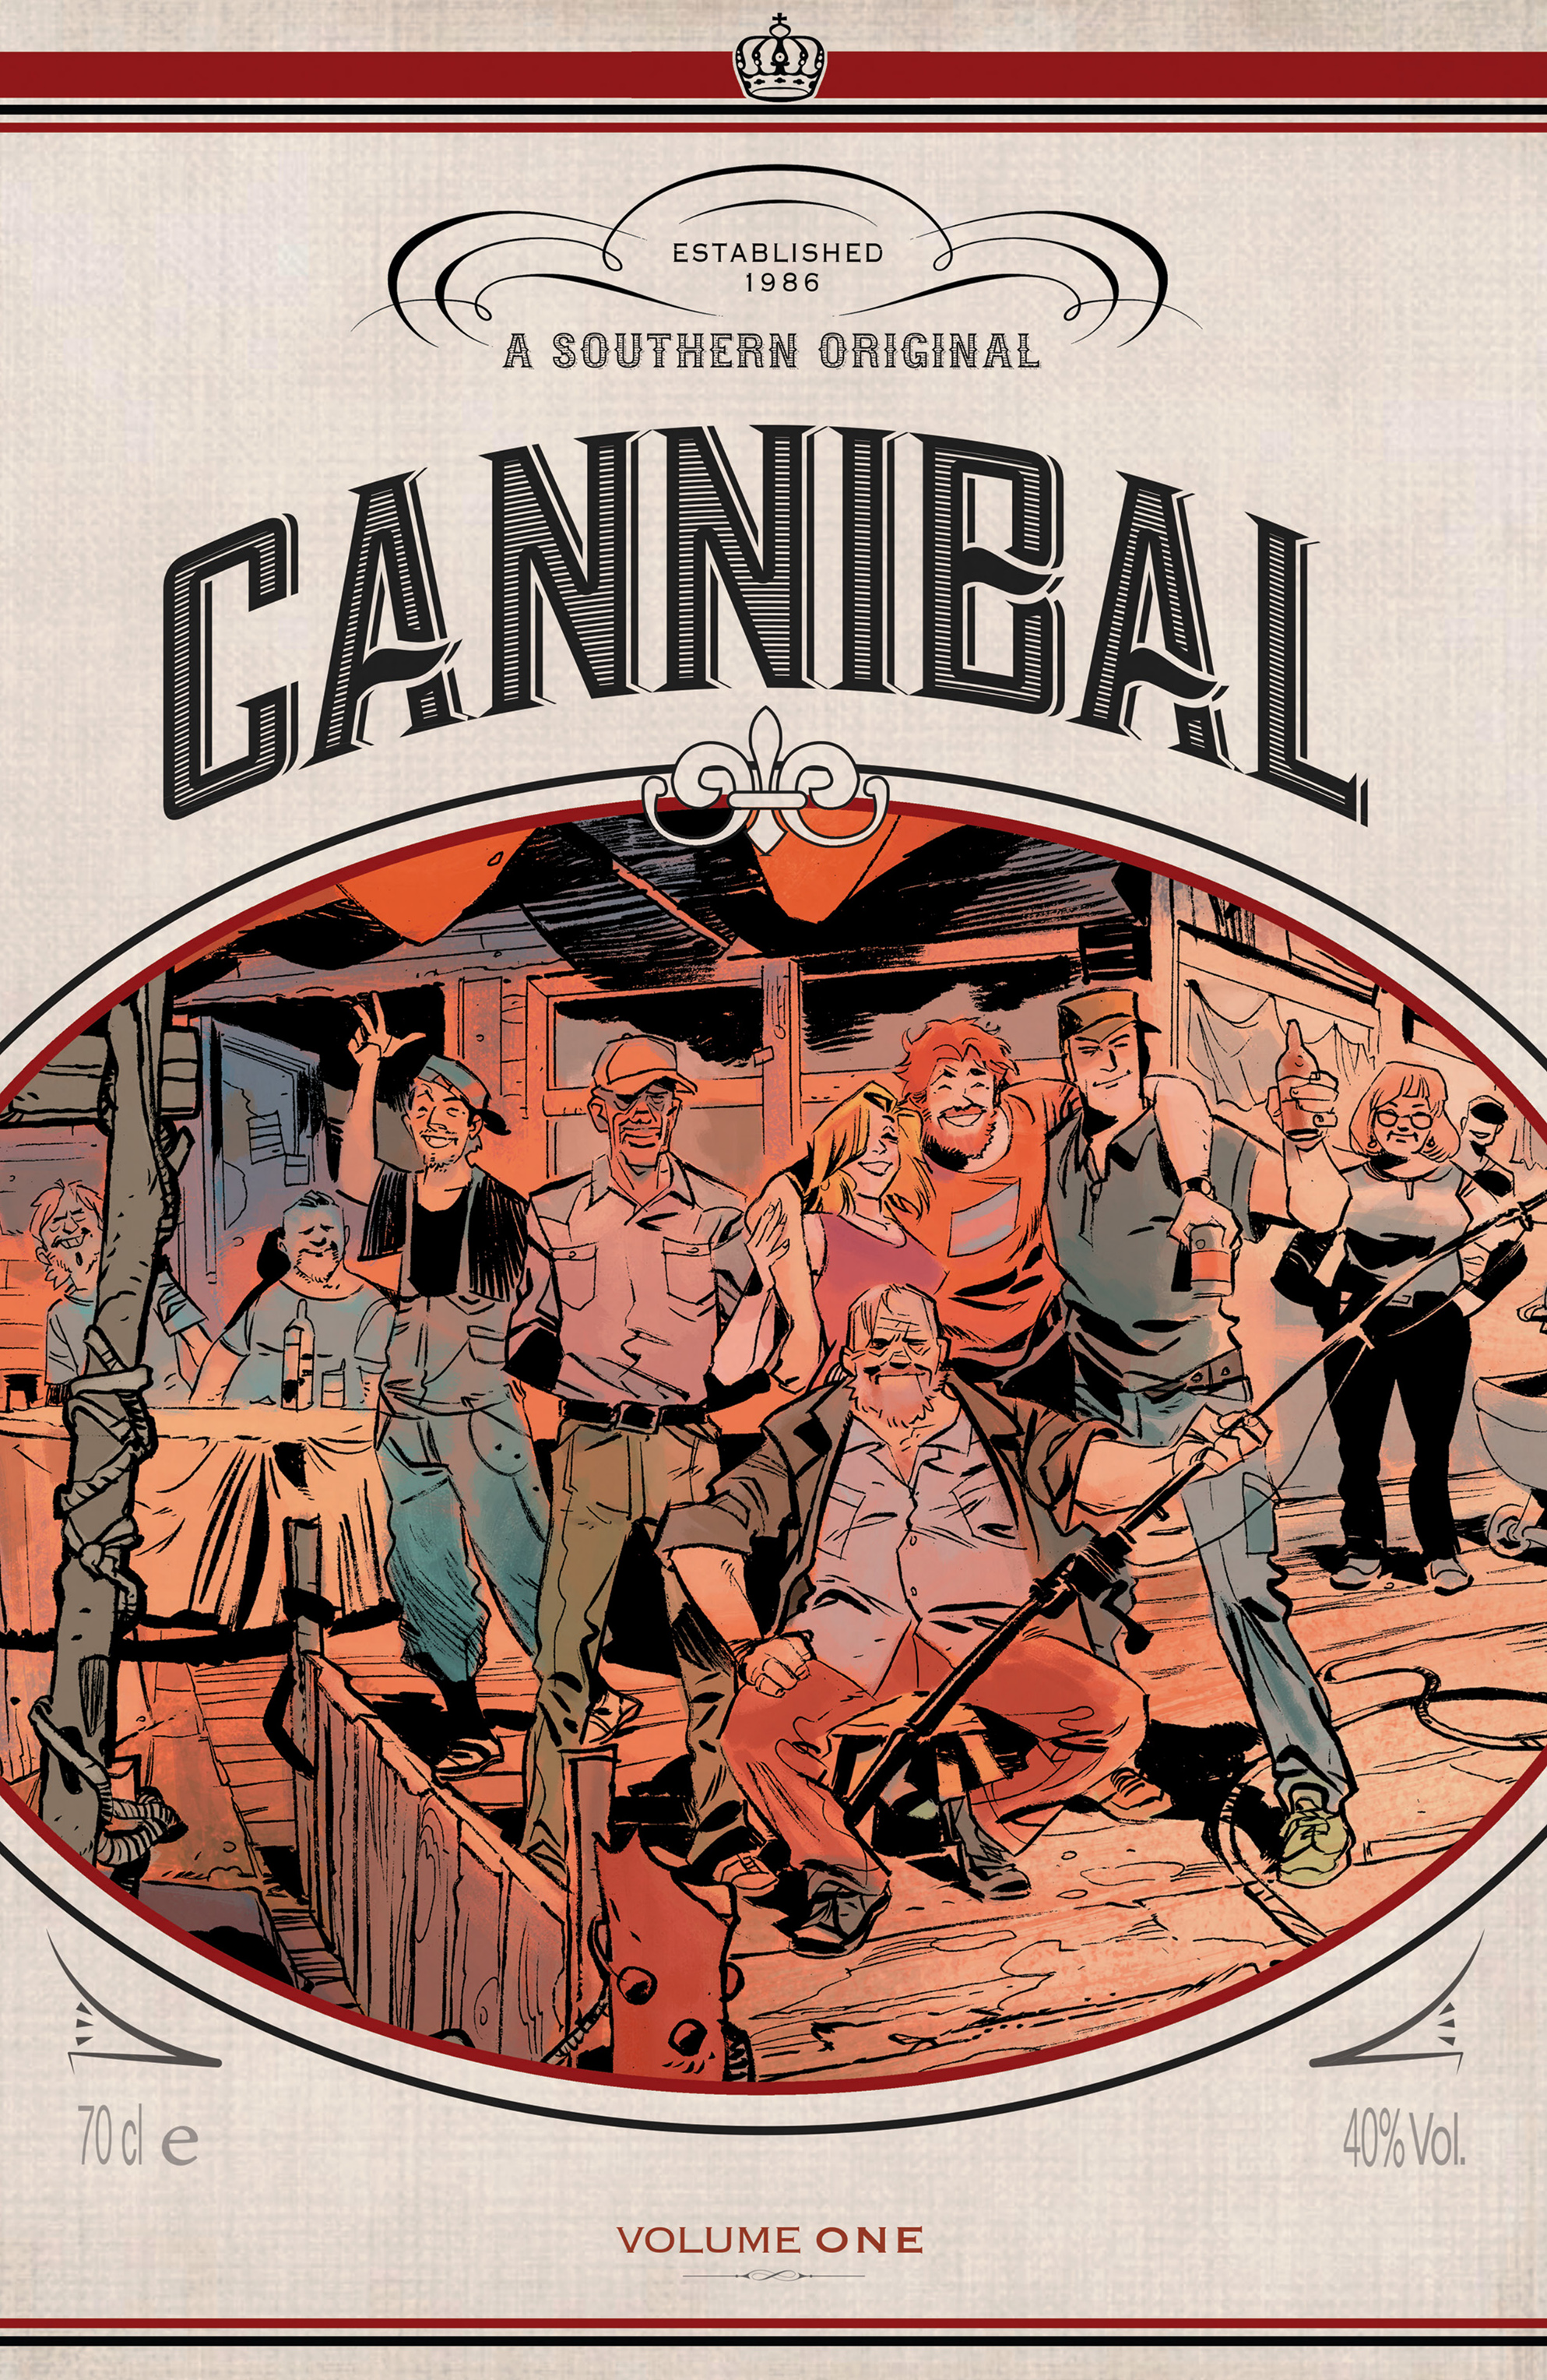 Cannibal Comix - Cannibal 2017 Tpb | Read Cannibal 2017 Tpb comic online in high quality.  Read Full Comic online for free - Read comics online in high quality .|  READ COMIC ONLINE